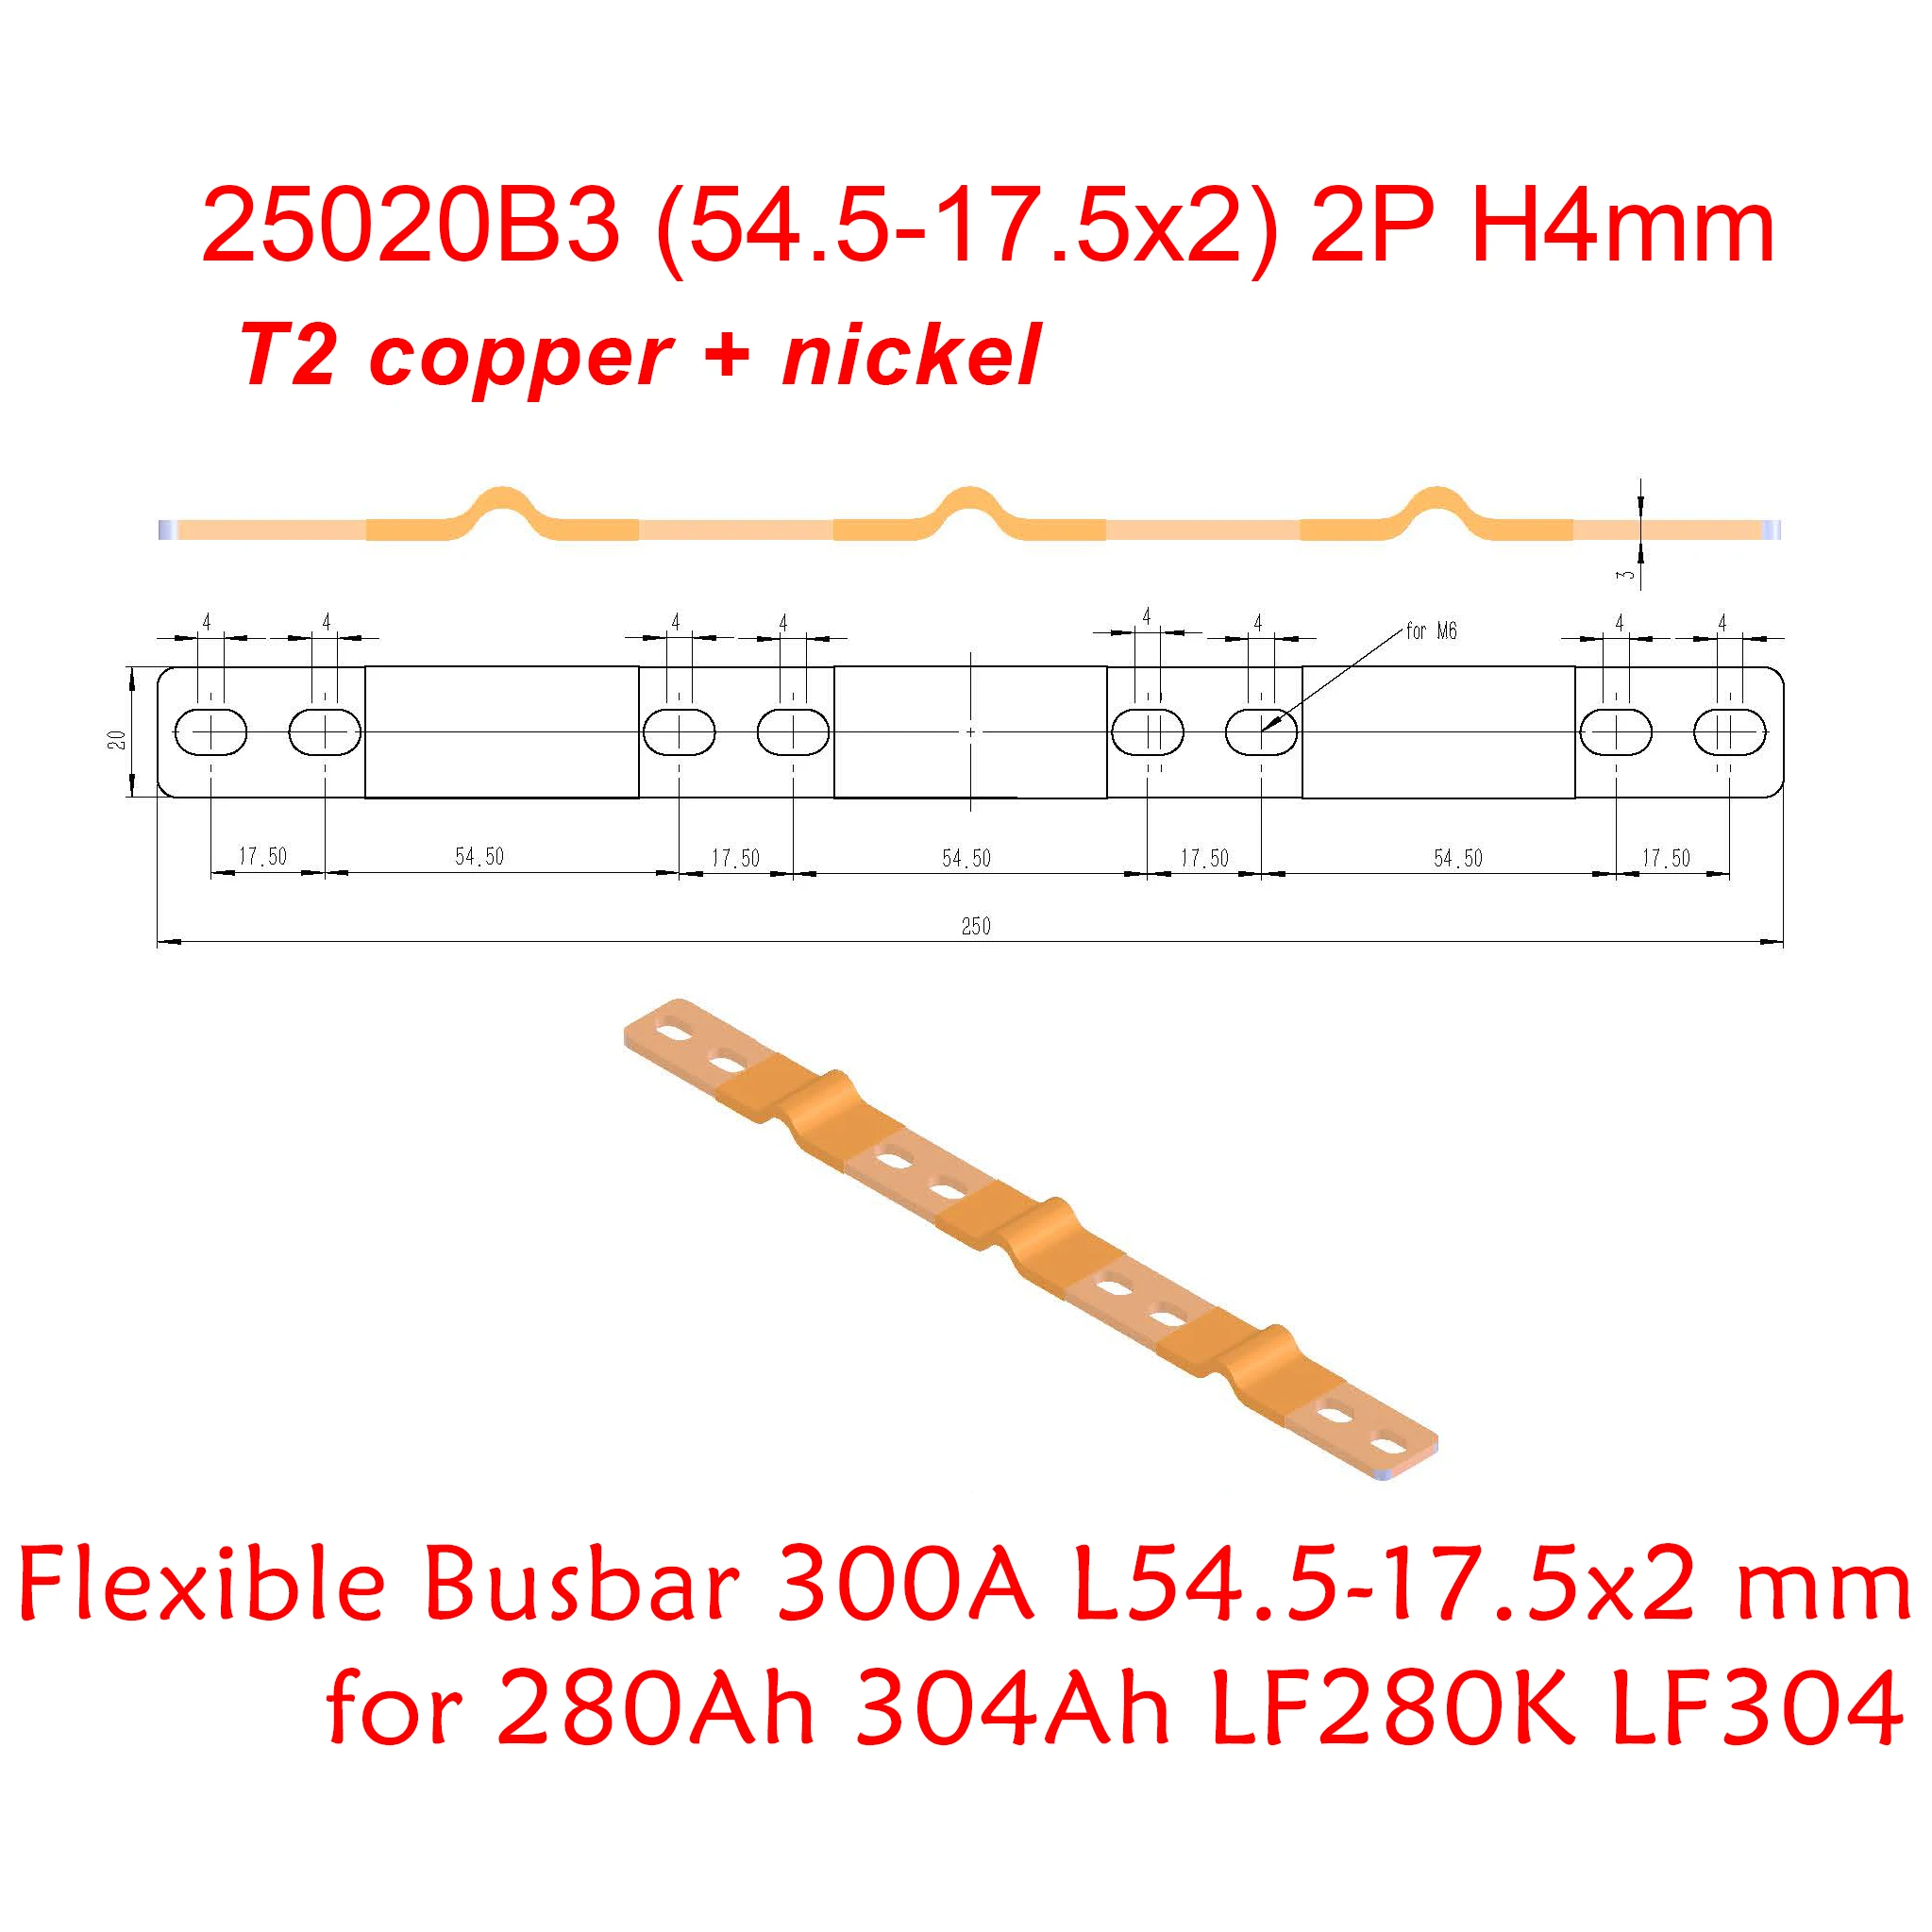 Busbar Manufacturers Usa  Copper Flexible Busbar - Battery Accessories &  Charger Accessories - Aliexpress